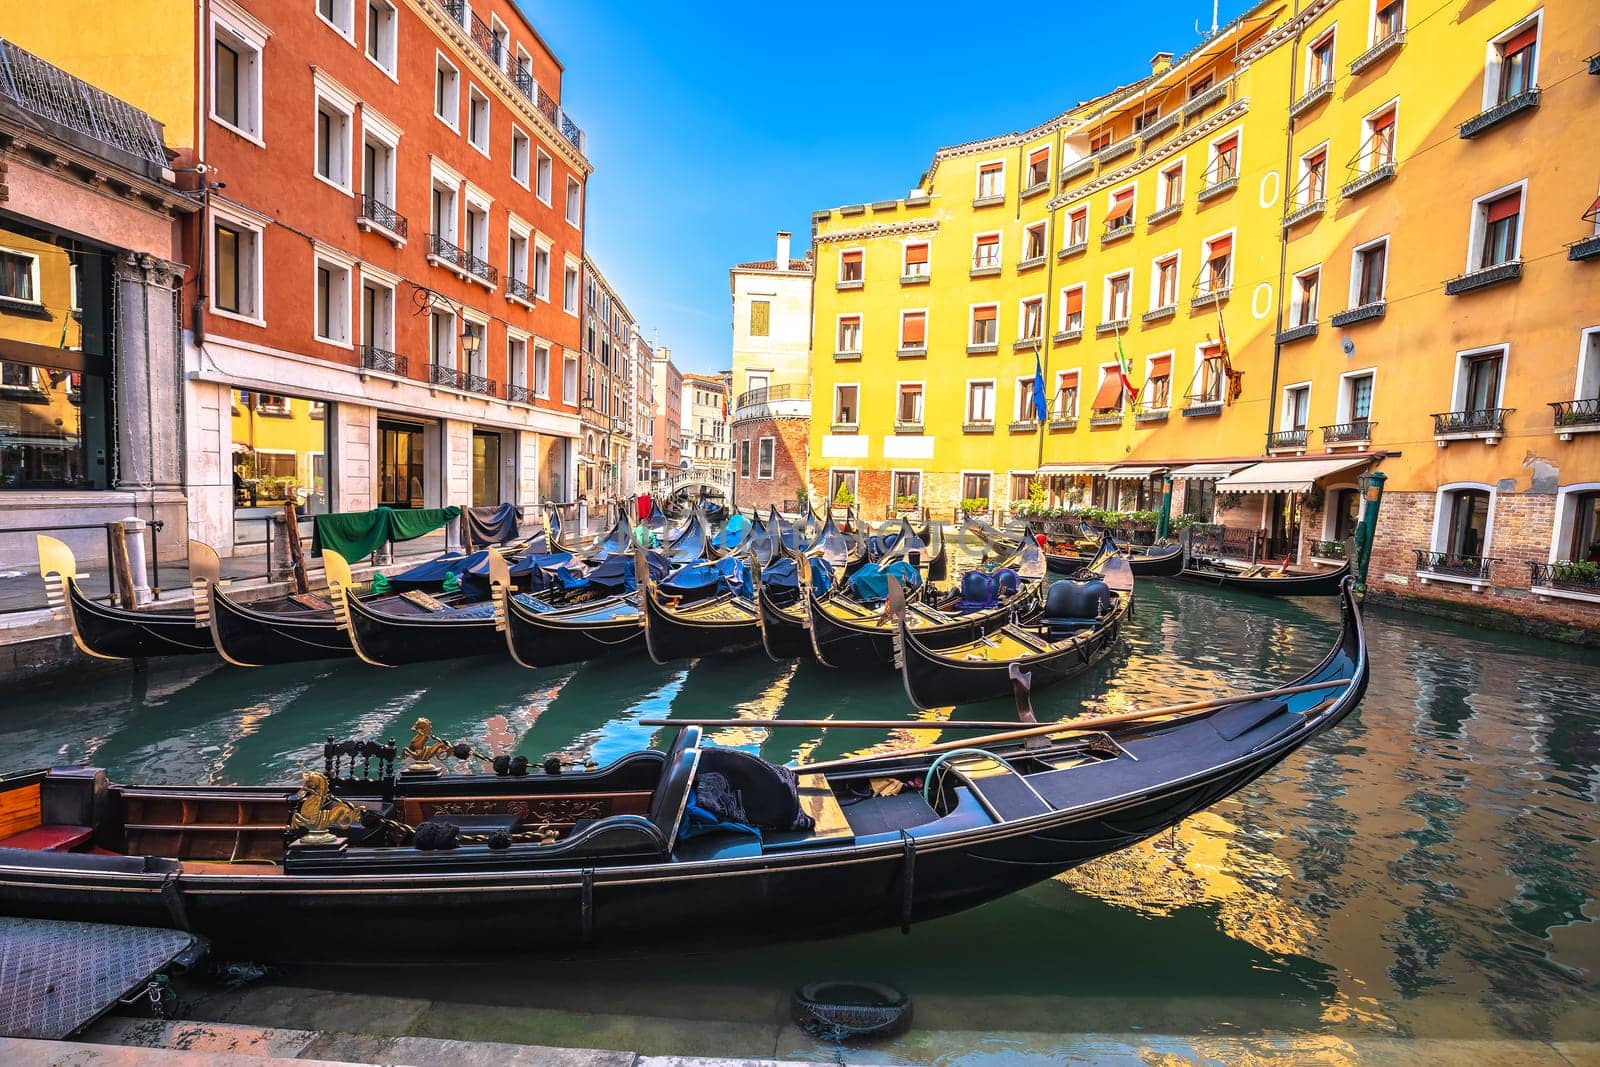 Bacino Orseolo channel gondolas and colorful architecture of Venice view, tourist destination in northern Iraly